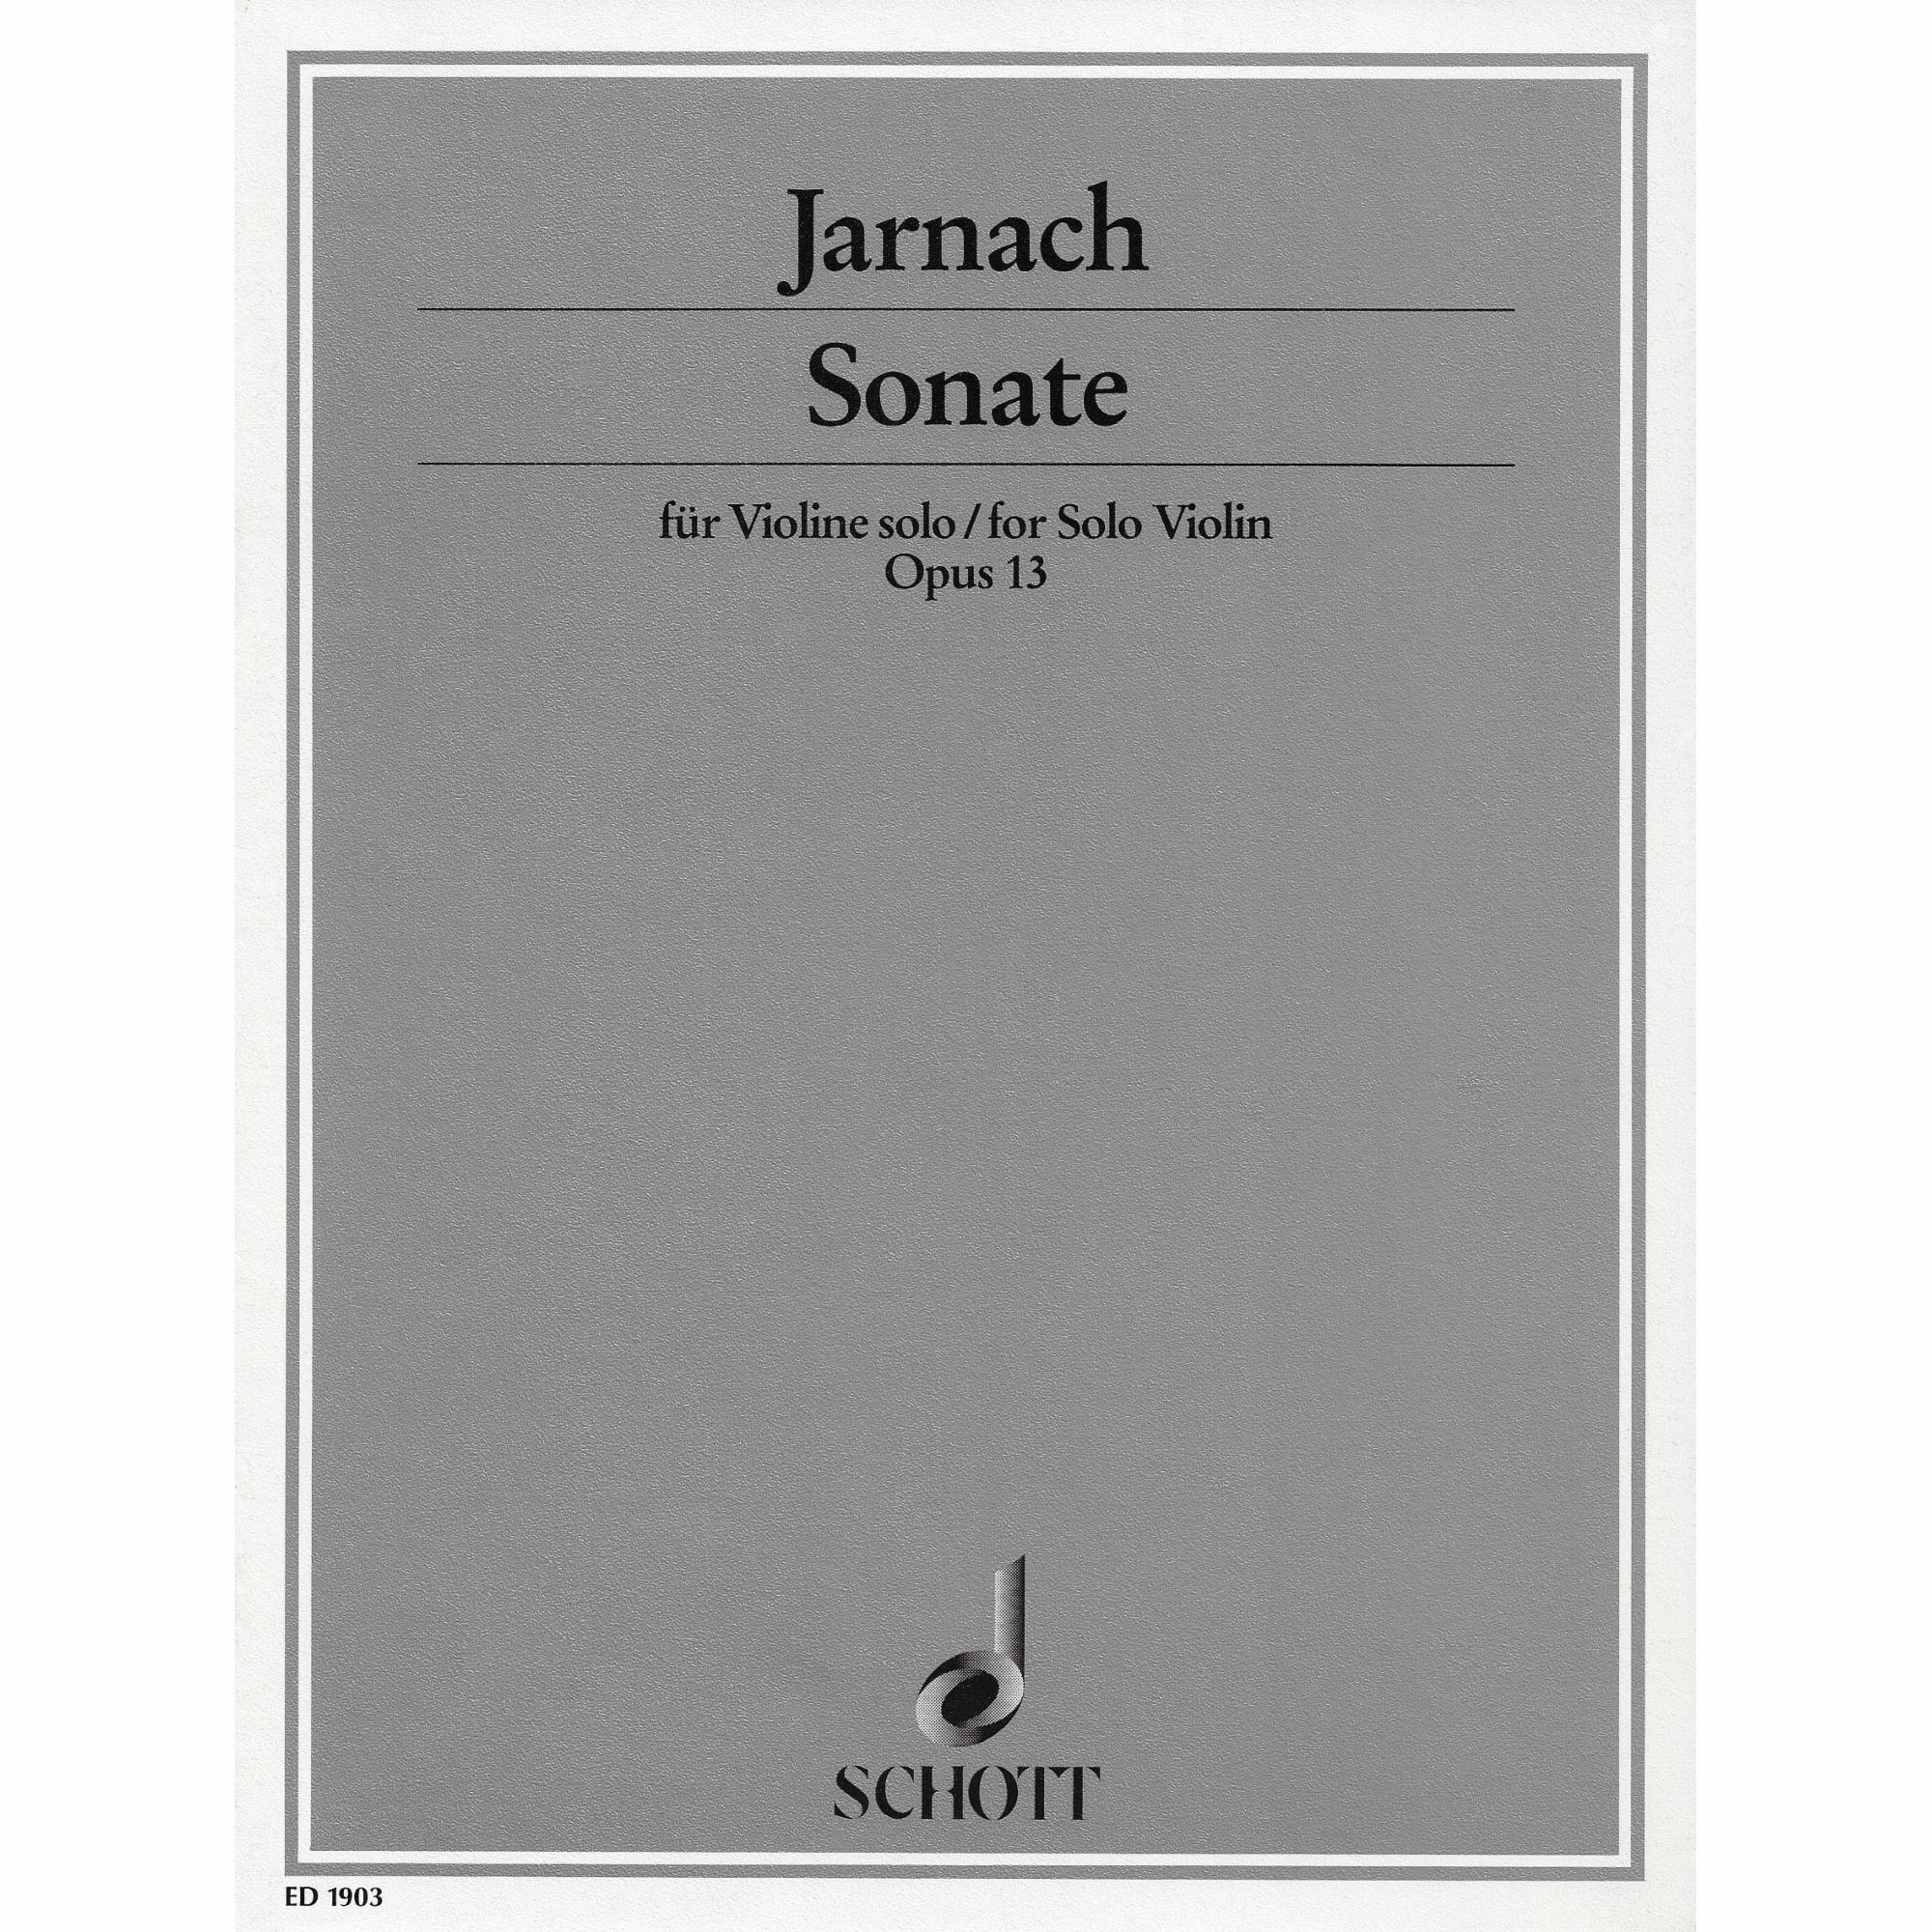 Jarnach -- Sonata, Op. 13 for Solo Violin